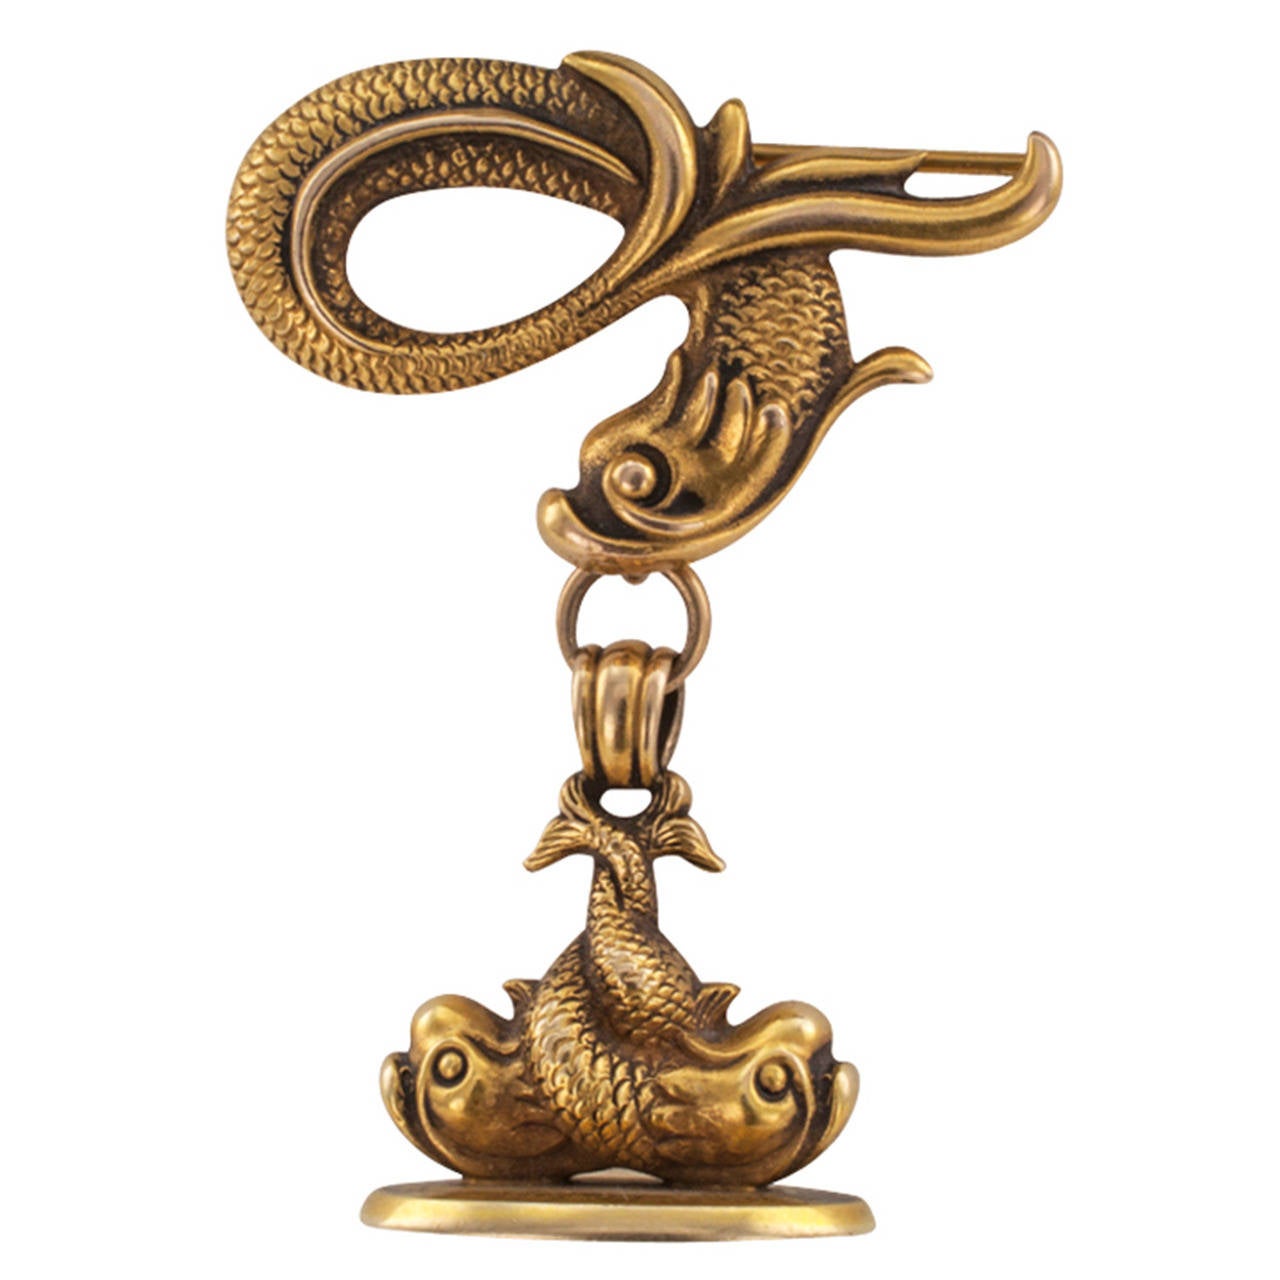 Art Nouveau Watch Fob of Mythological Sea Creatures